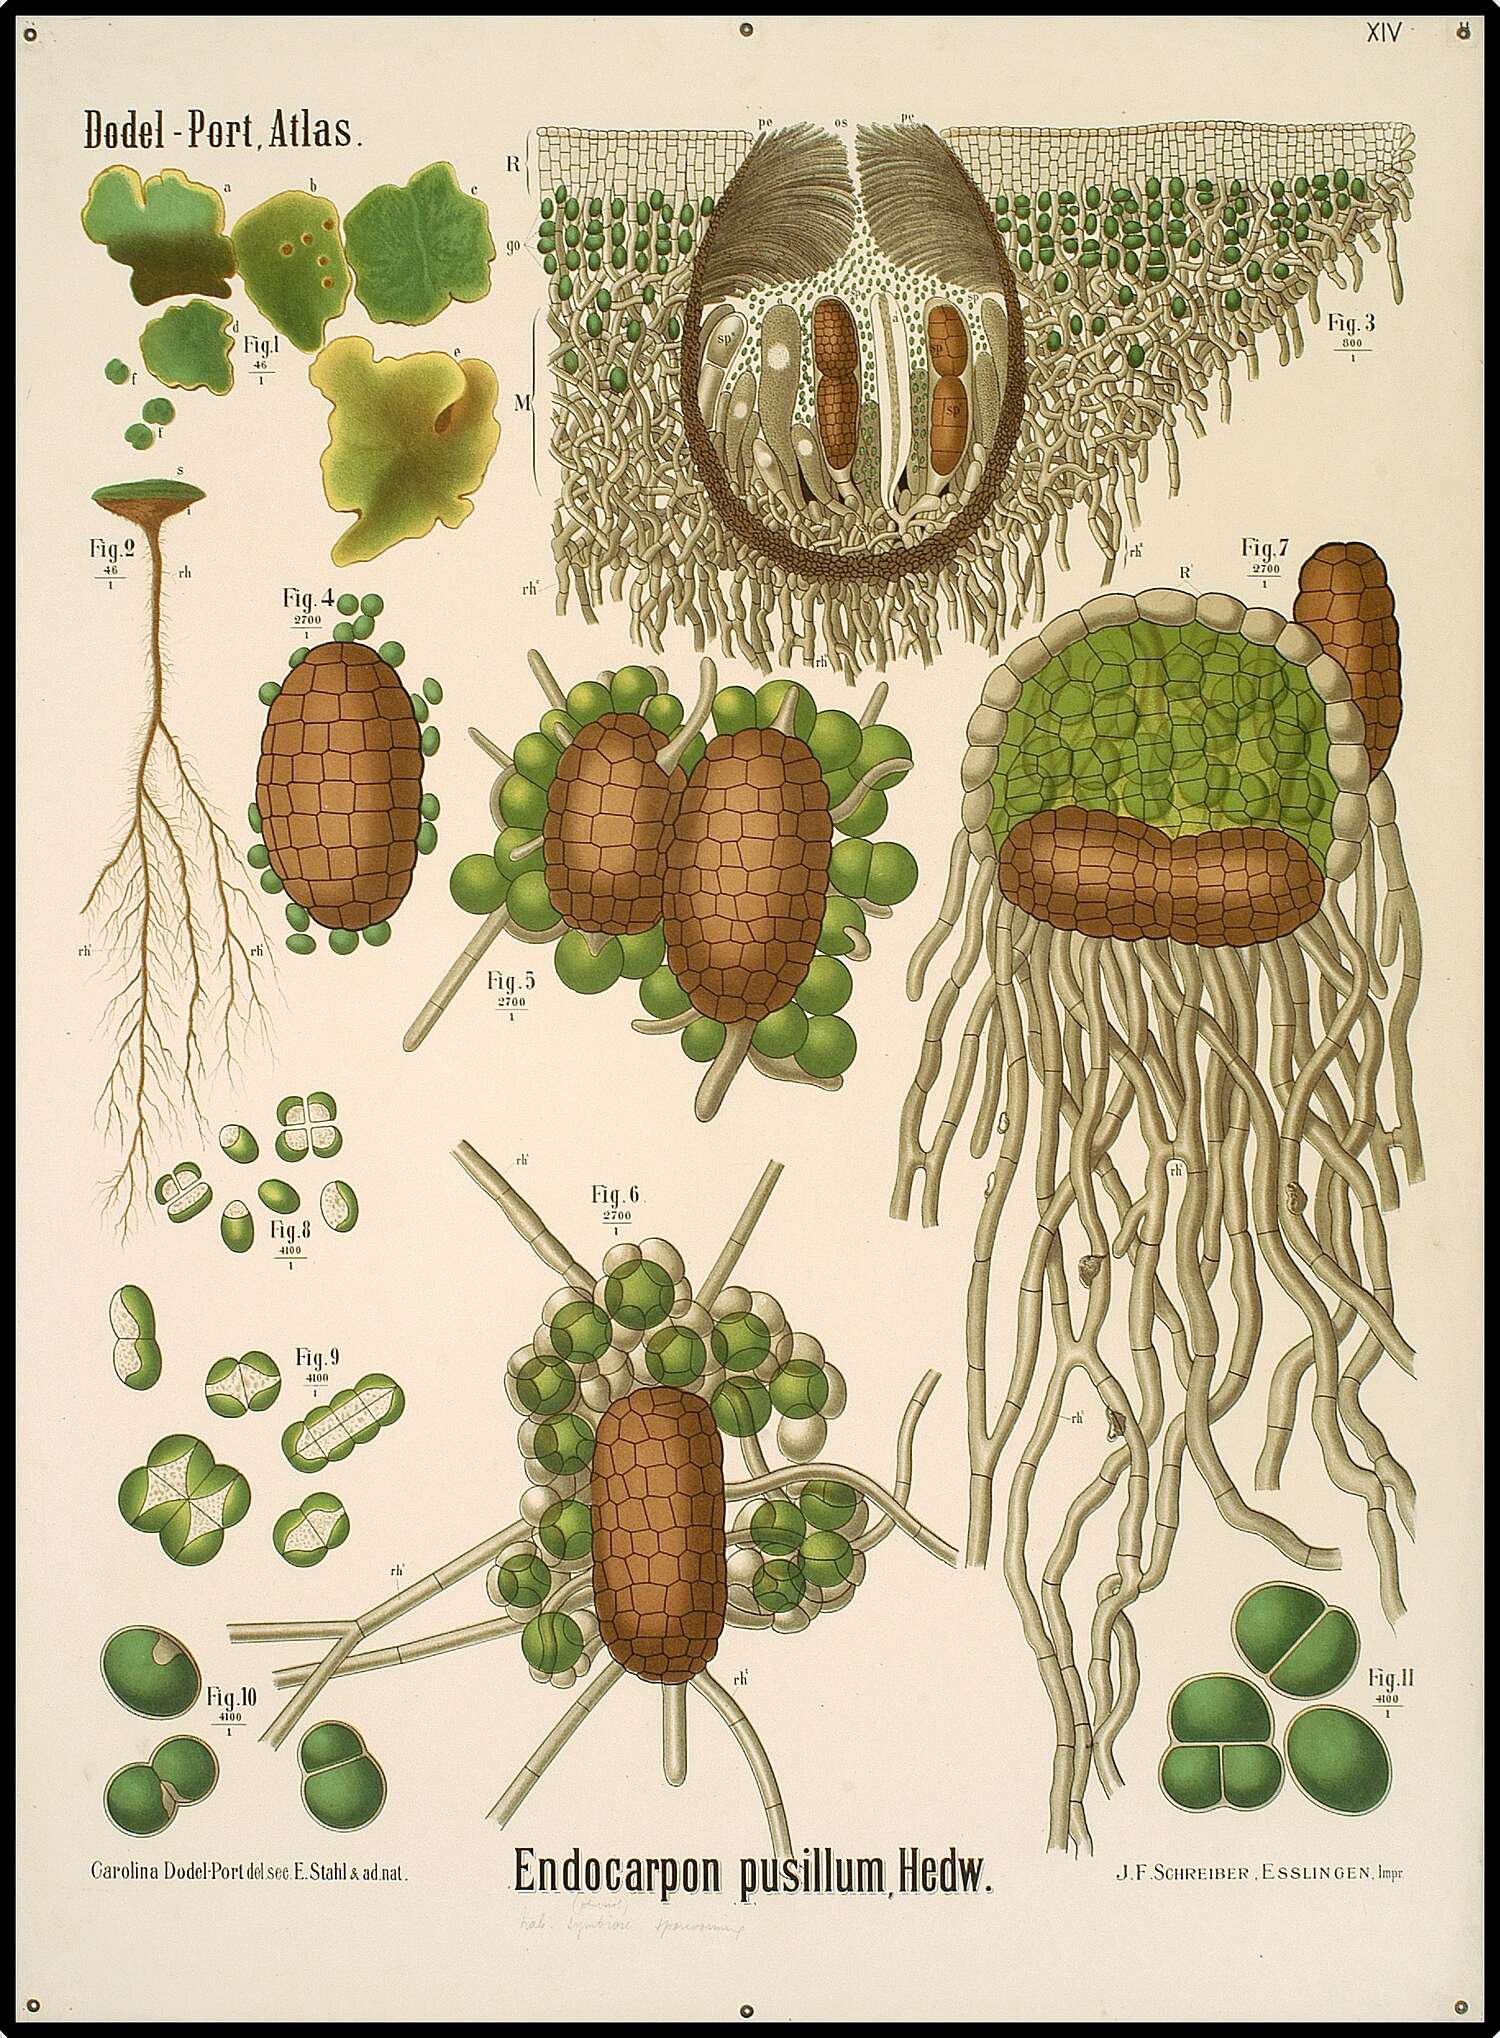 Image of chalice lichen